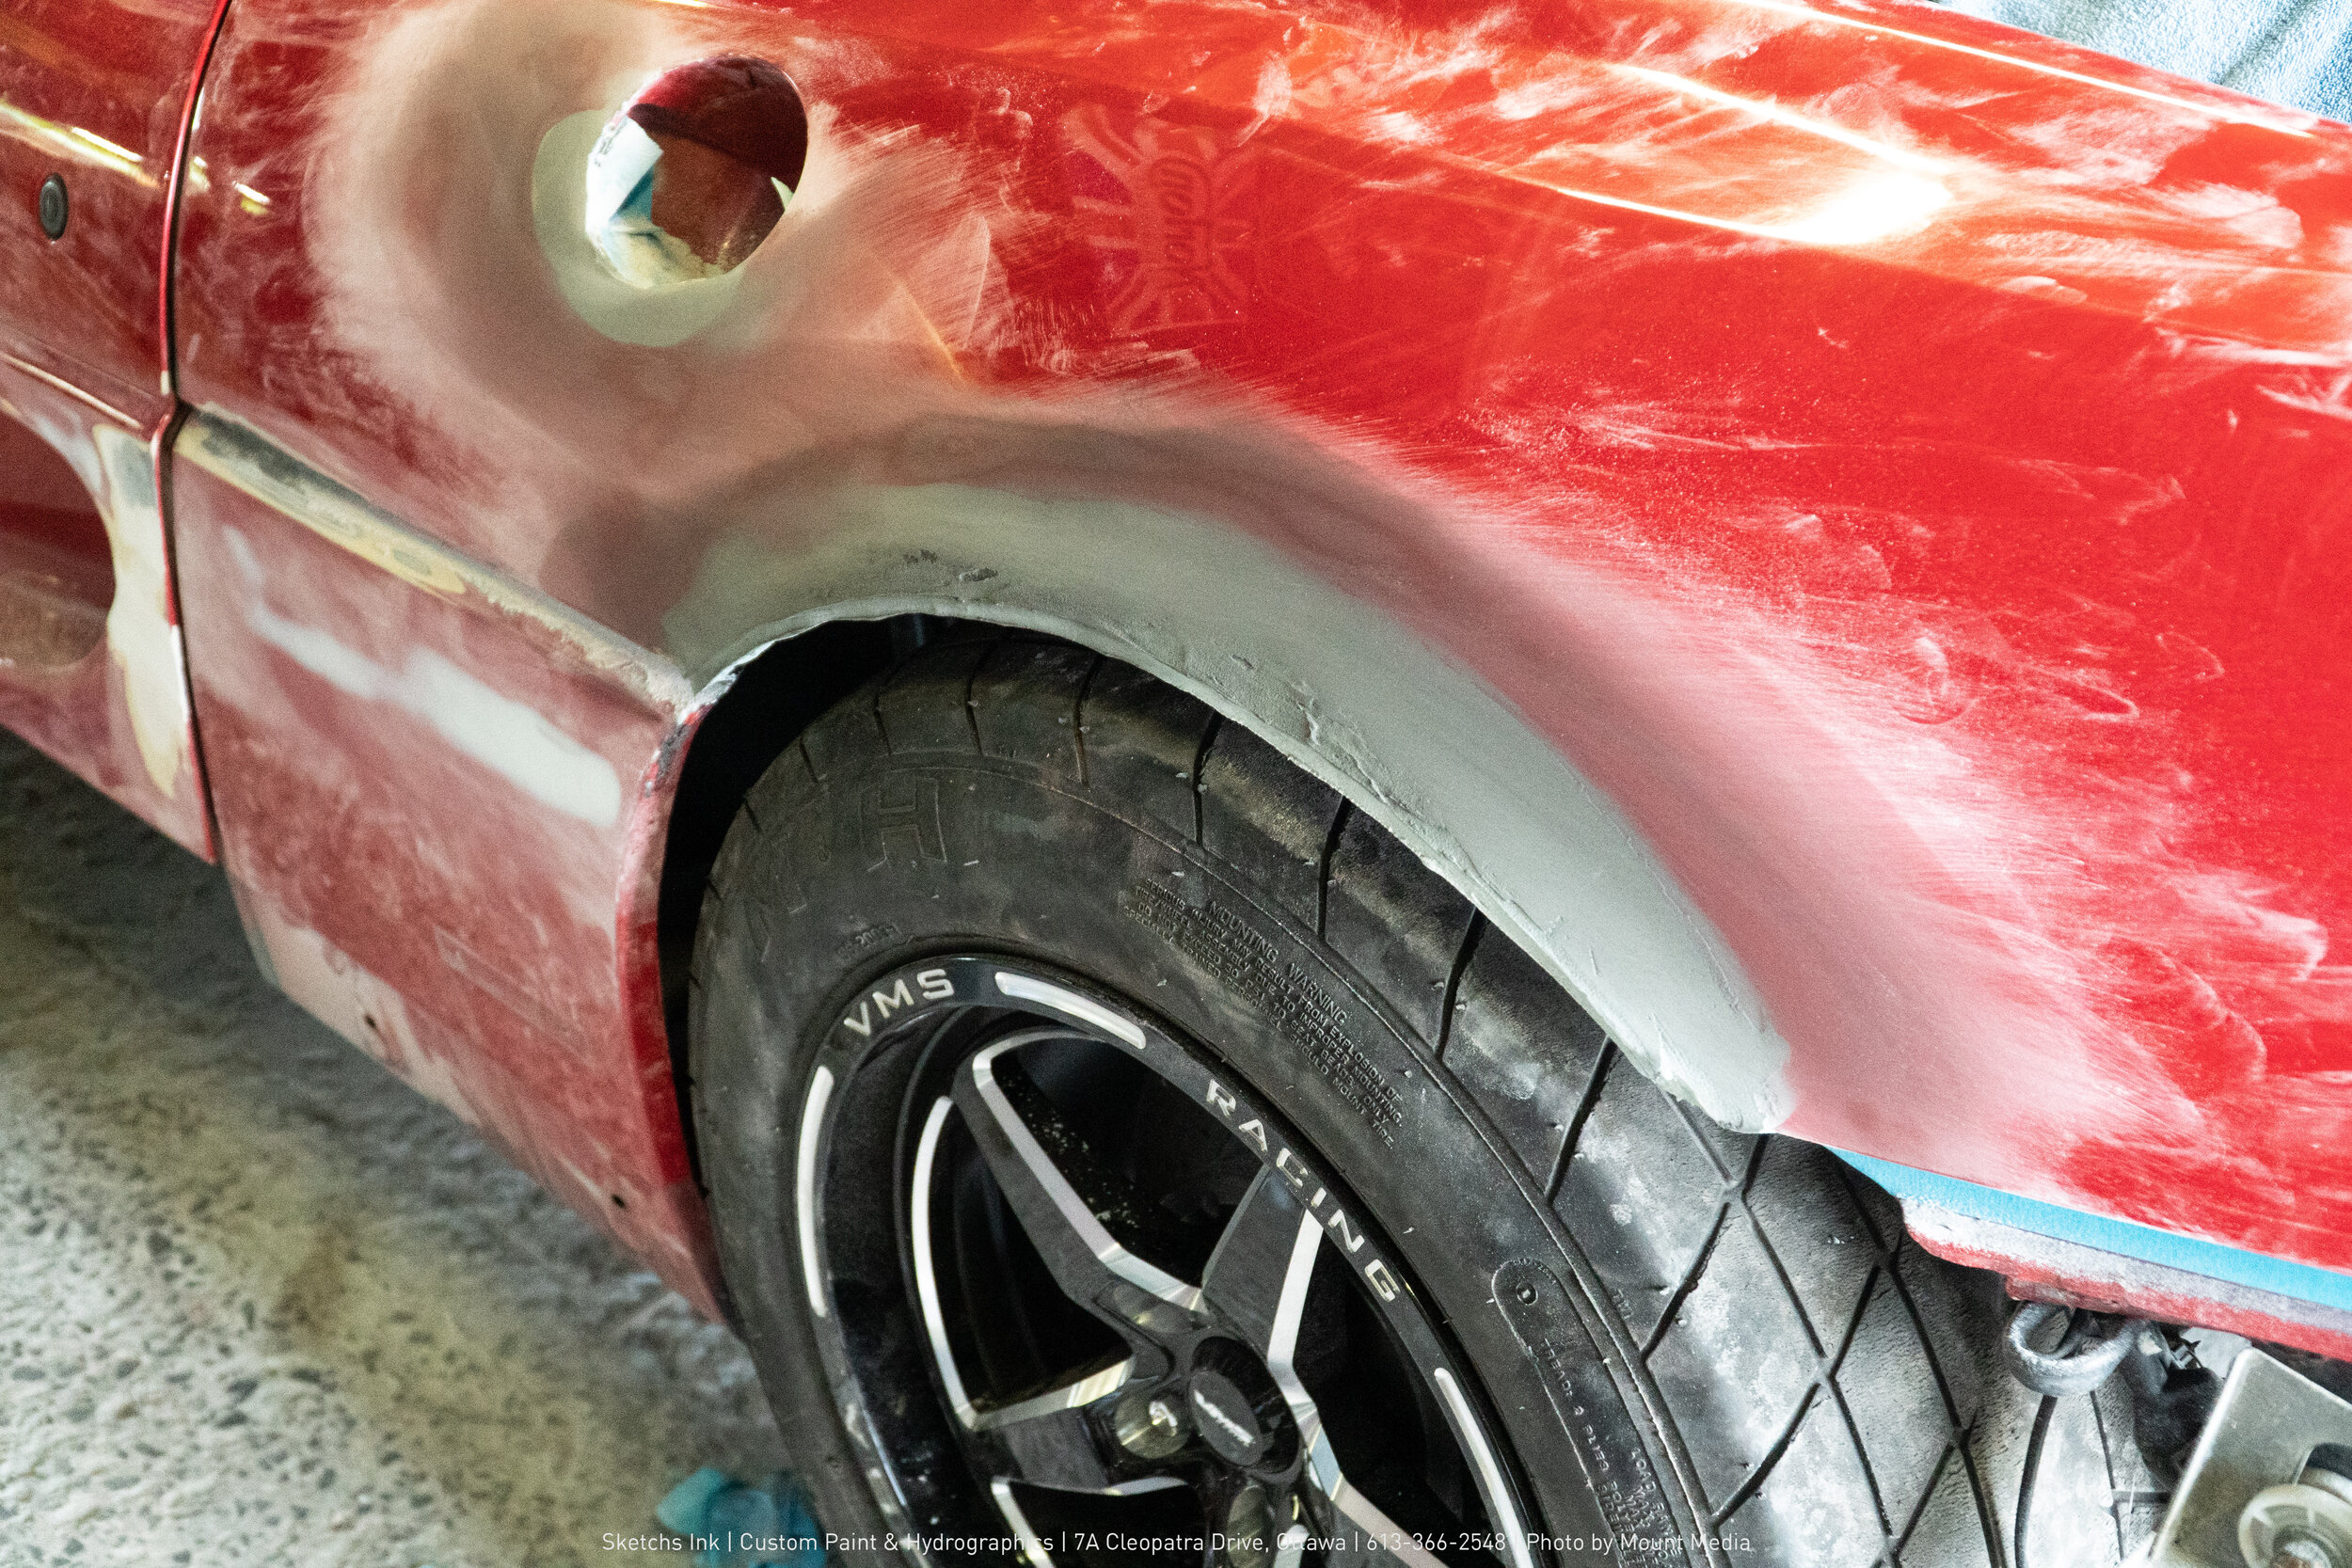 Restoring A Honda Swapped Ferrari 355 Spyder — Sketchs Ink